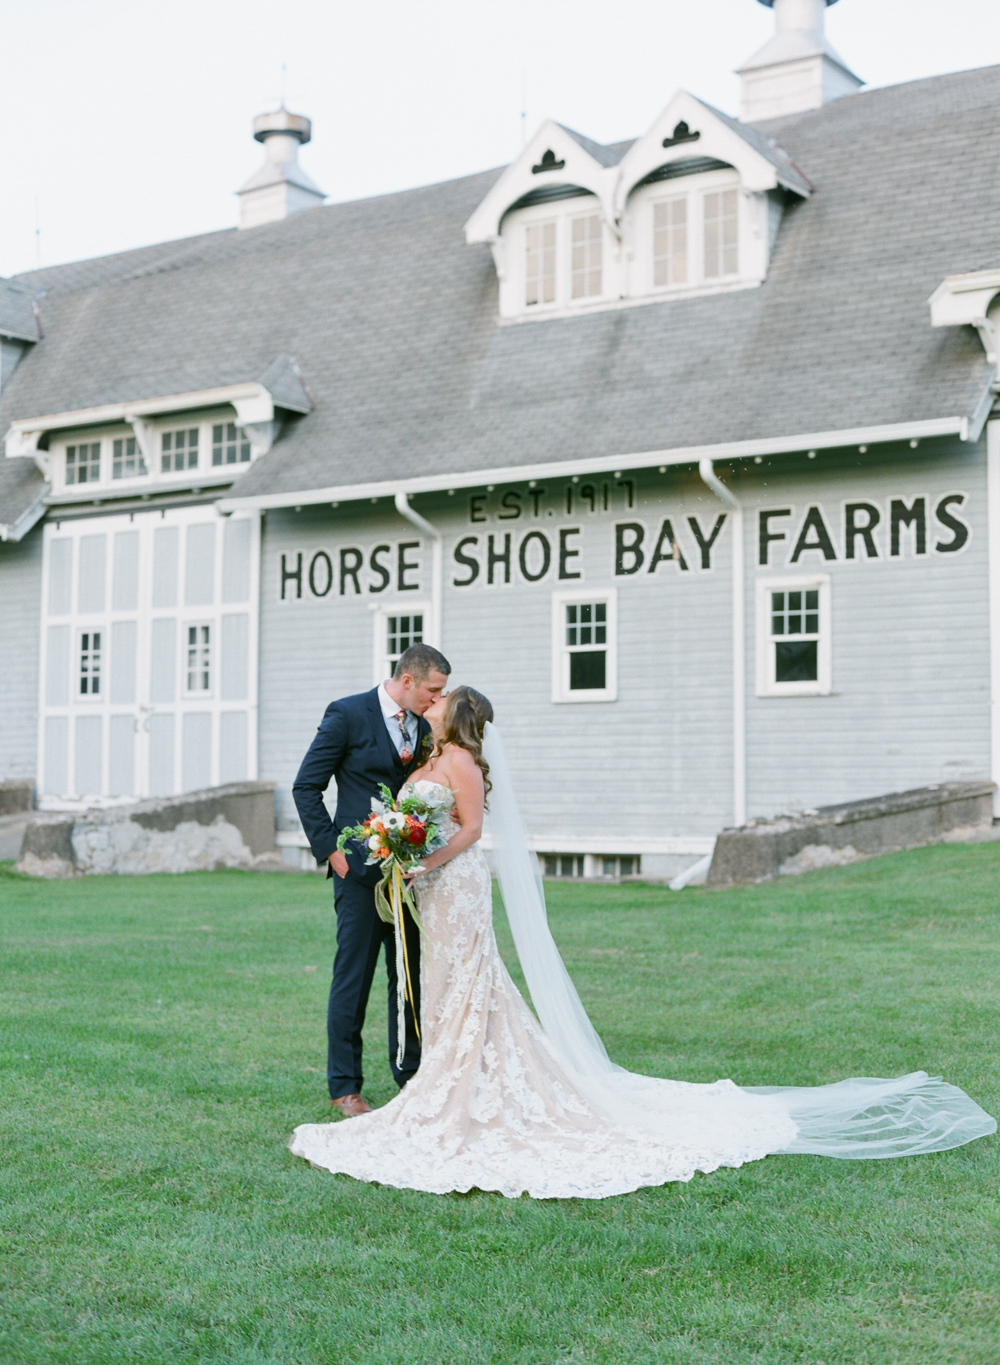 horseshoe bay farms wedding portraits by the barns